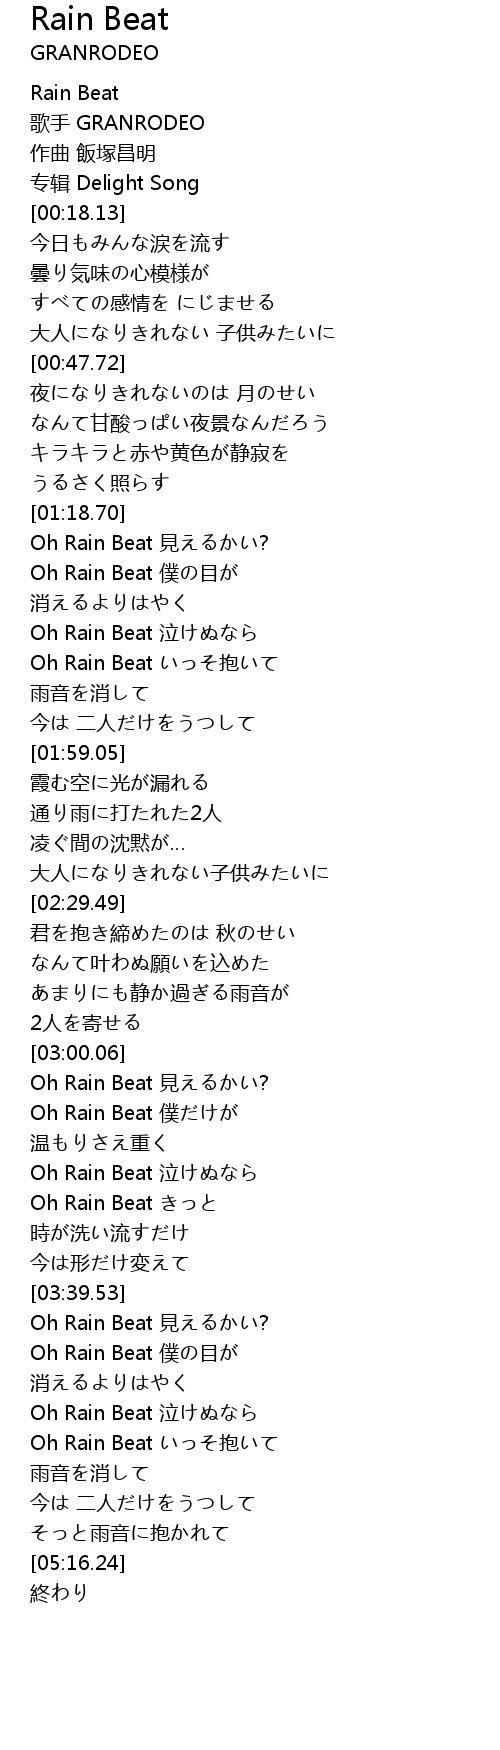 Rain Beat Lyrics Follow Lyrics